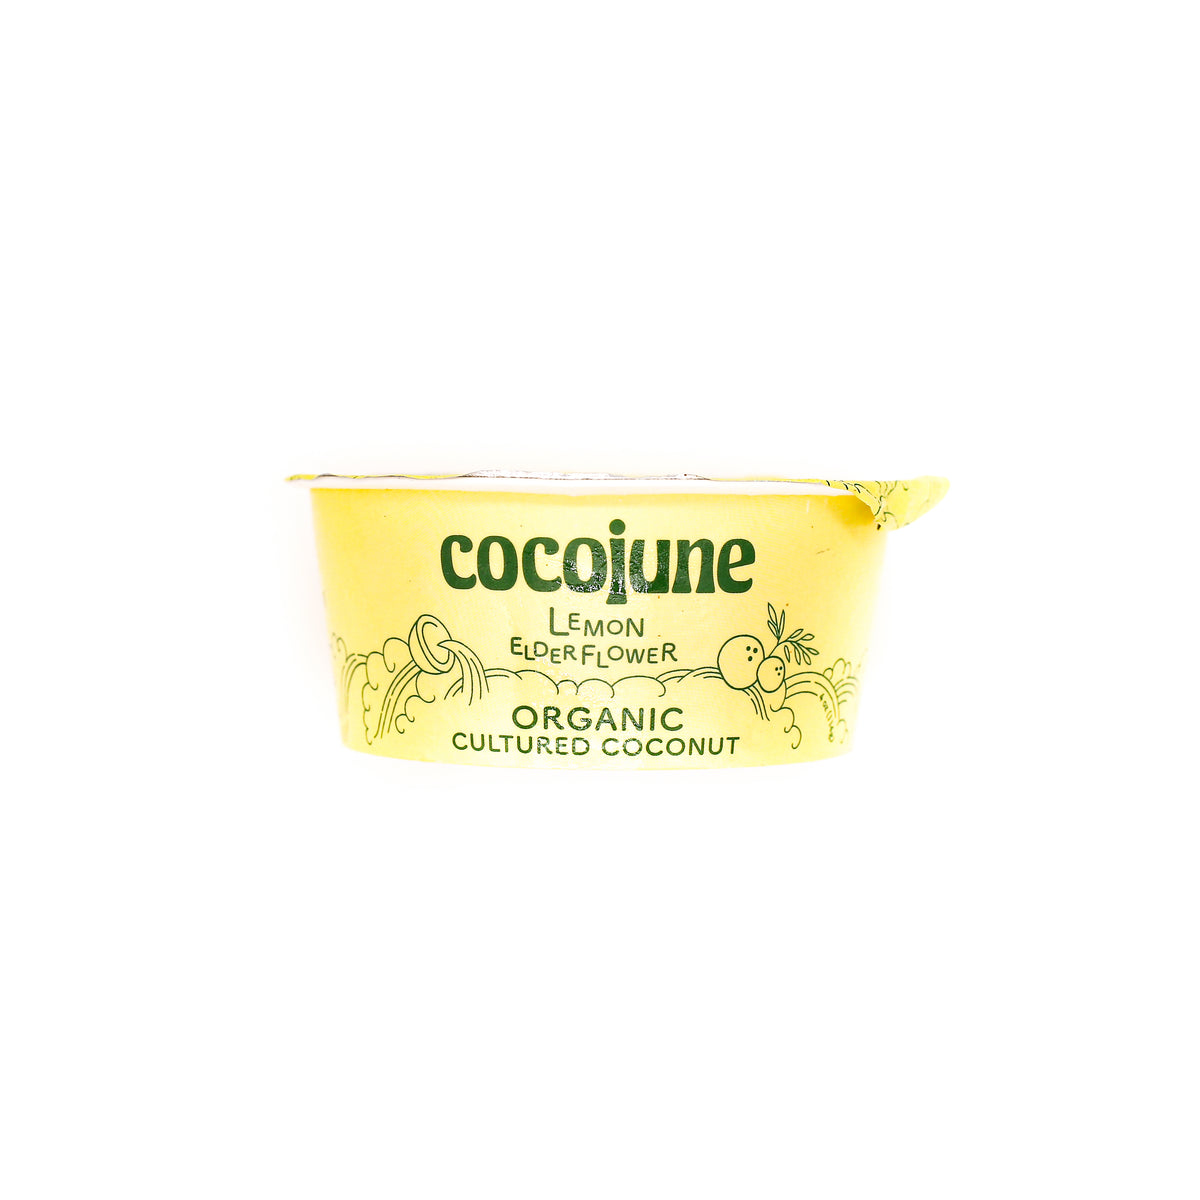 Cocojune Yogurt Lemon Elderflower